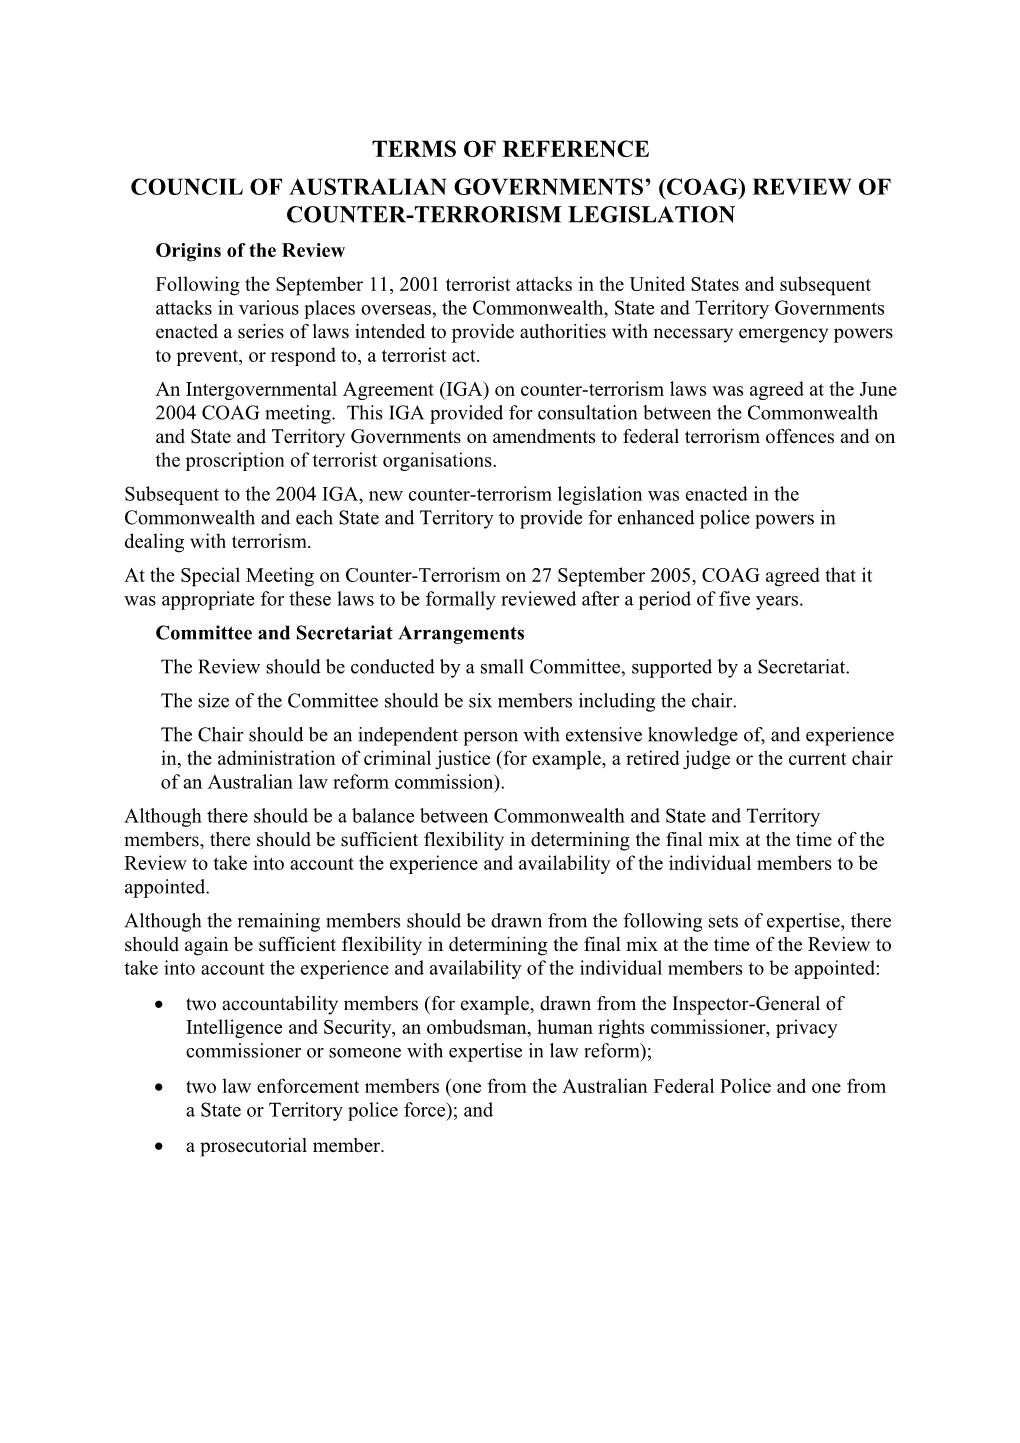 Council of Australian Governments (Coag) Review of Counterterrorism Legislation